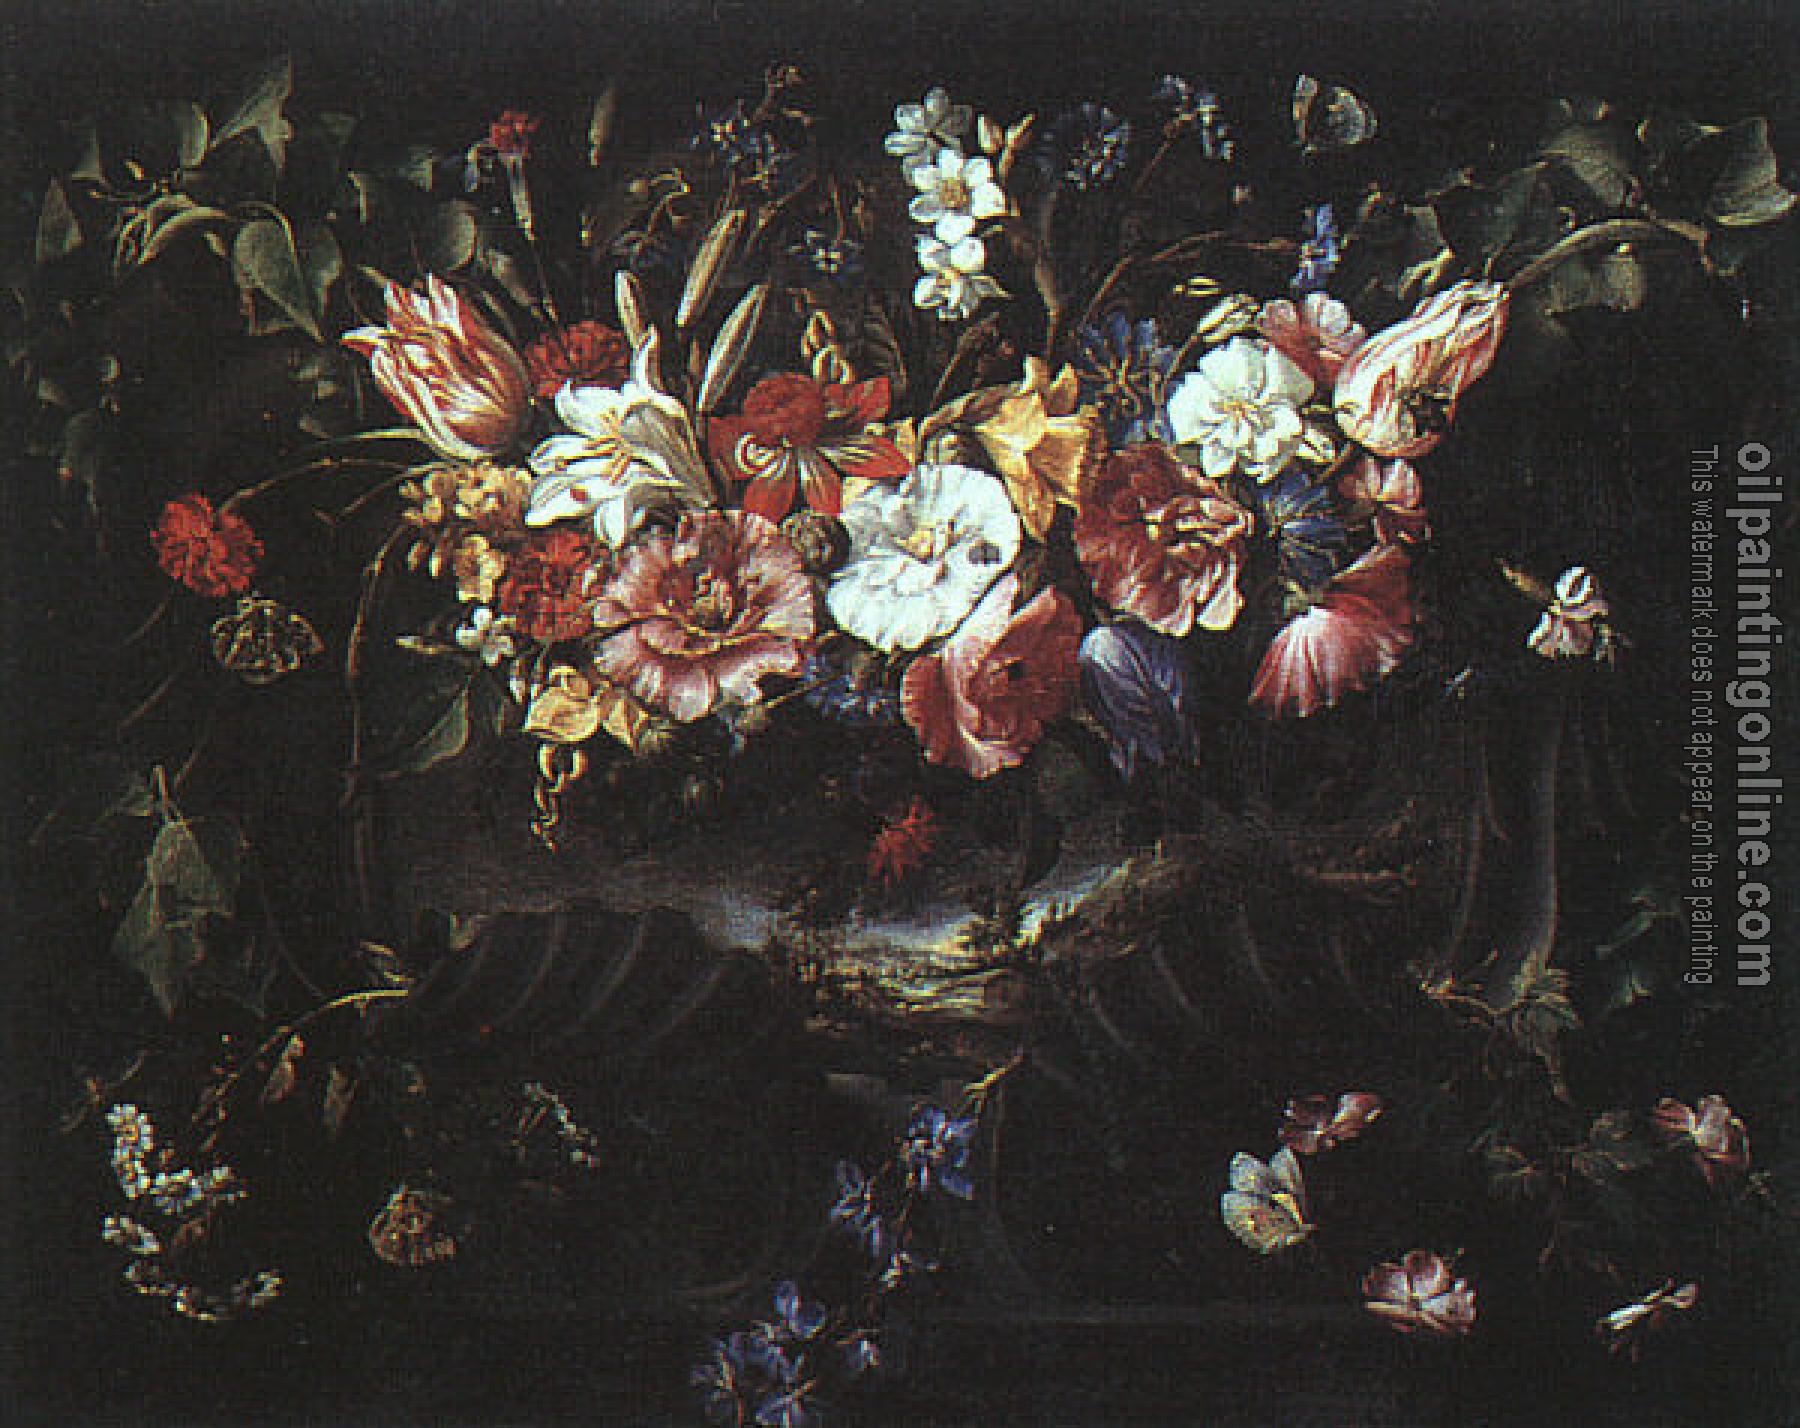 Arellano, Juan de - Graphic Garland of Flowers with Landscape